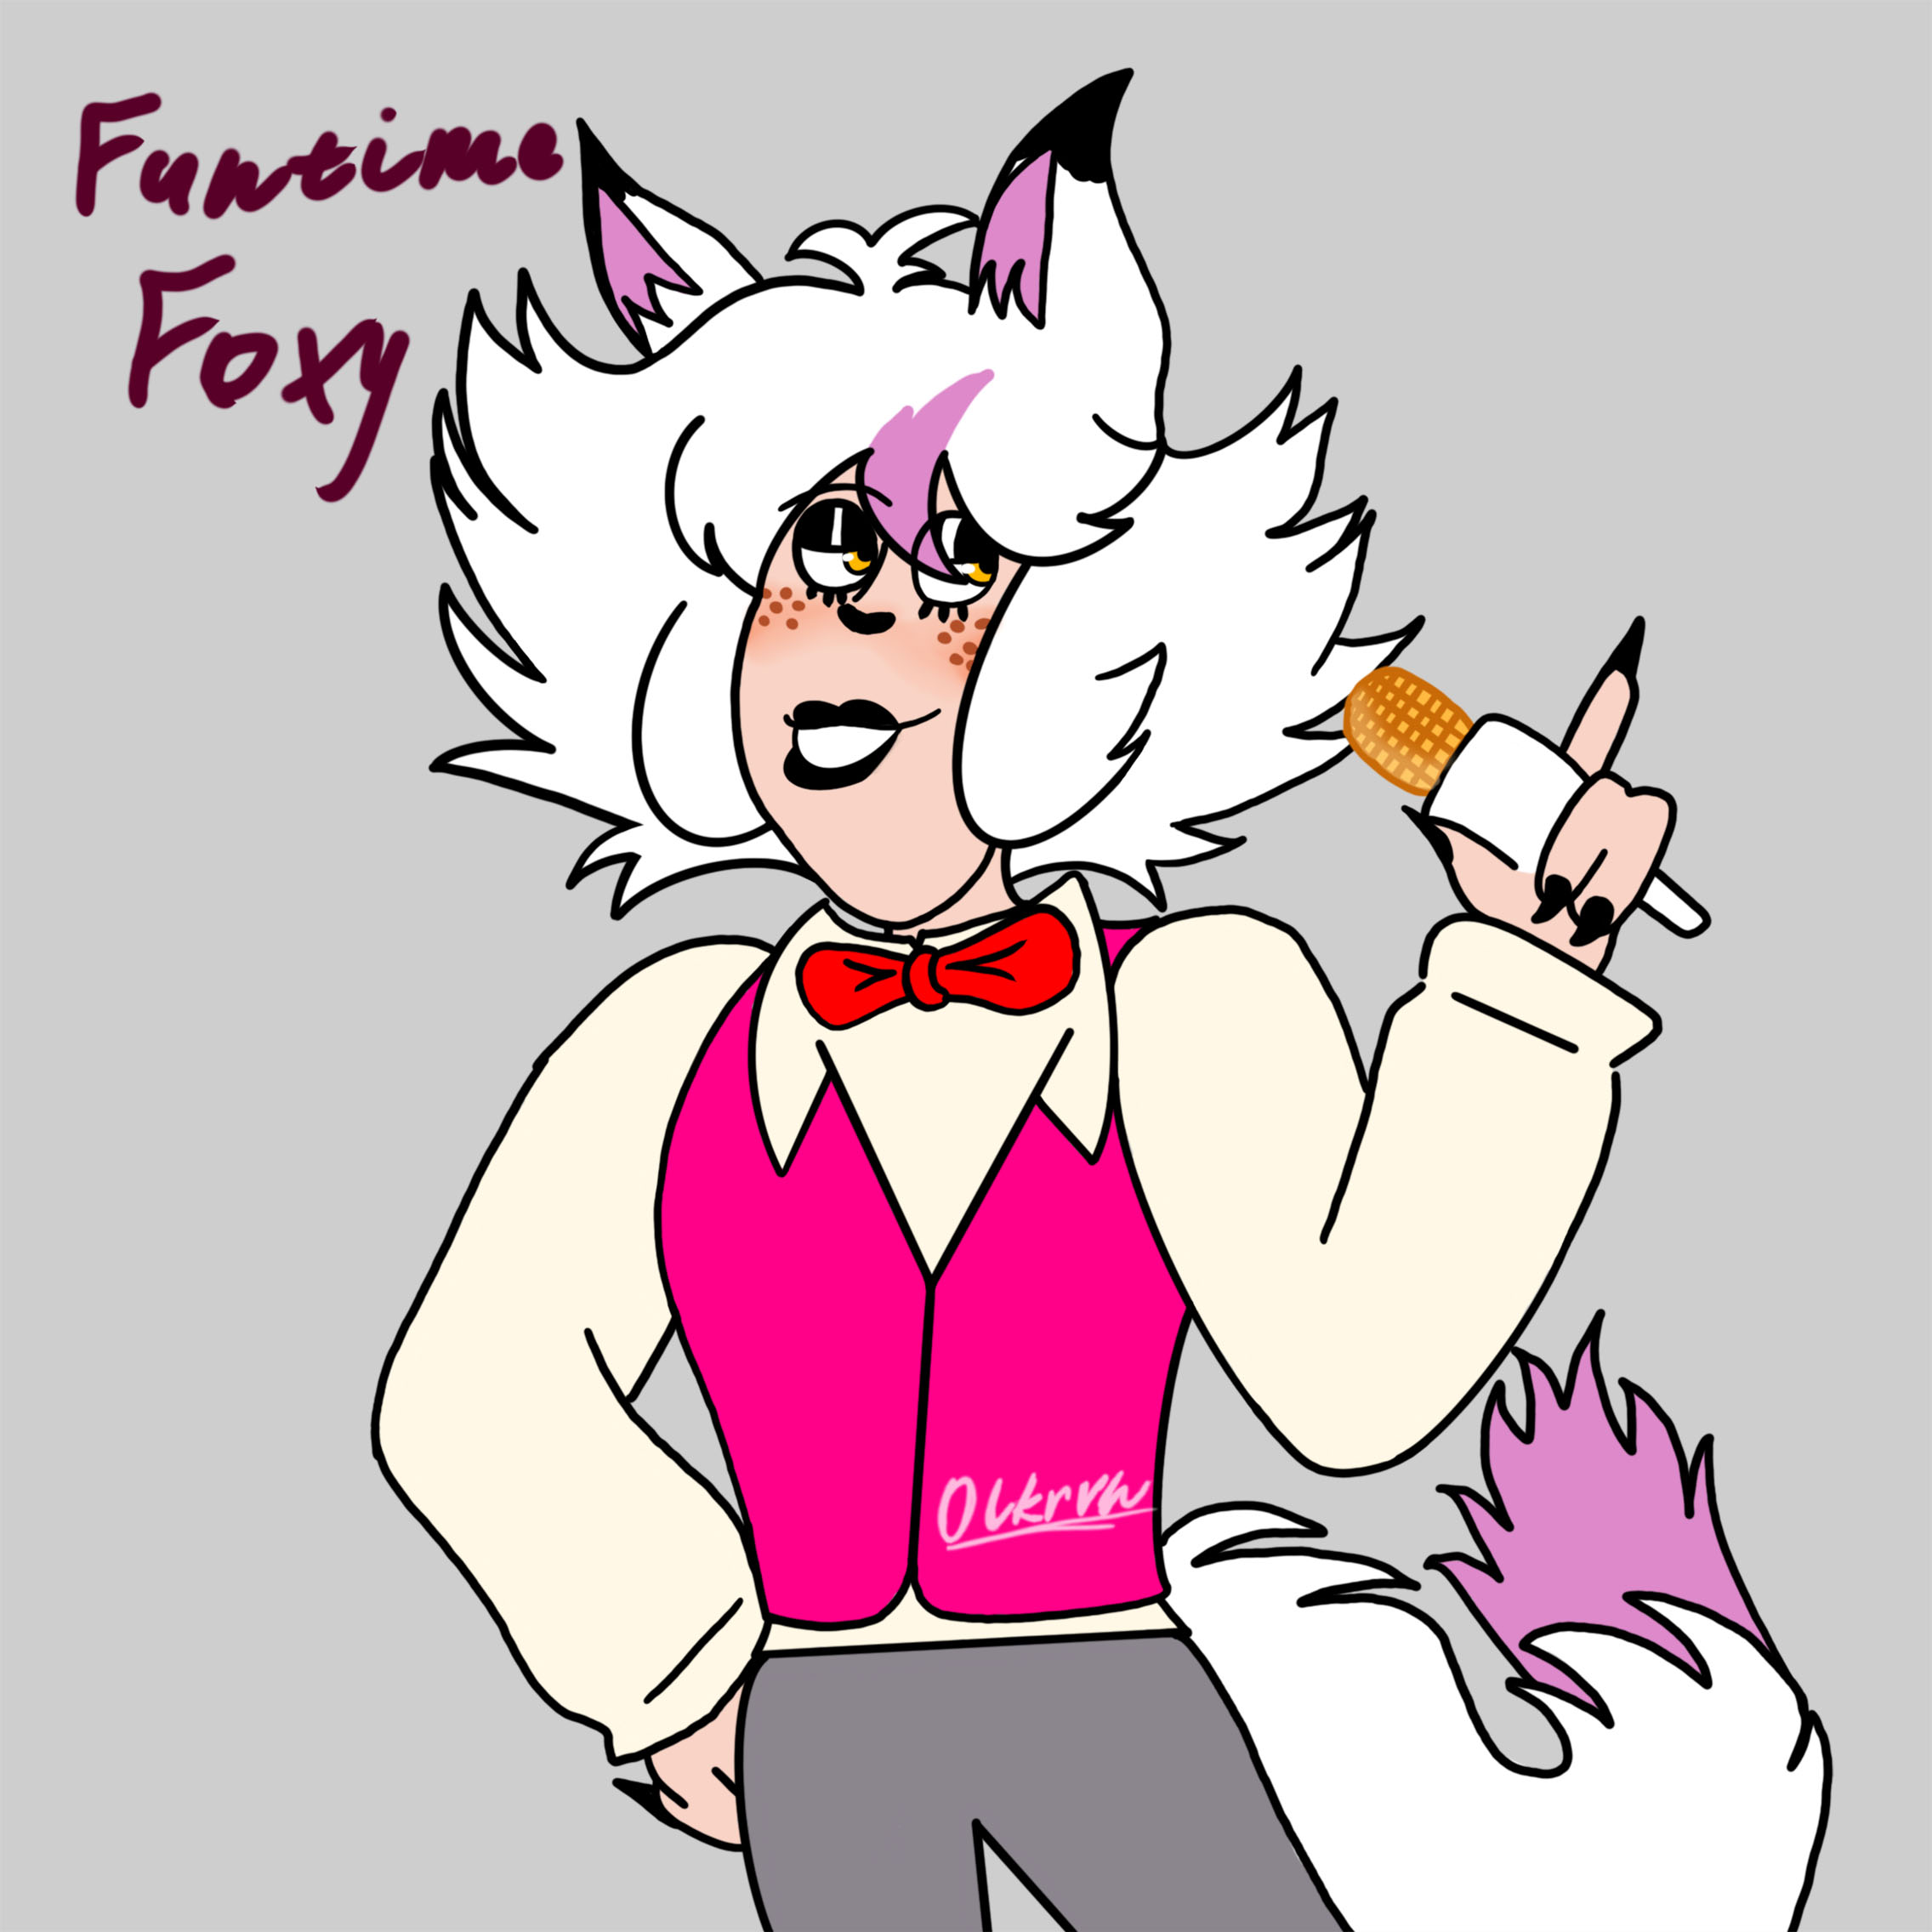 Funtime Foxy fan art preview image.